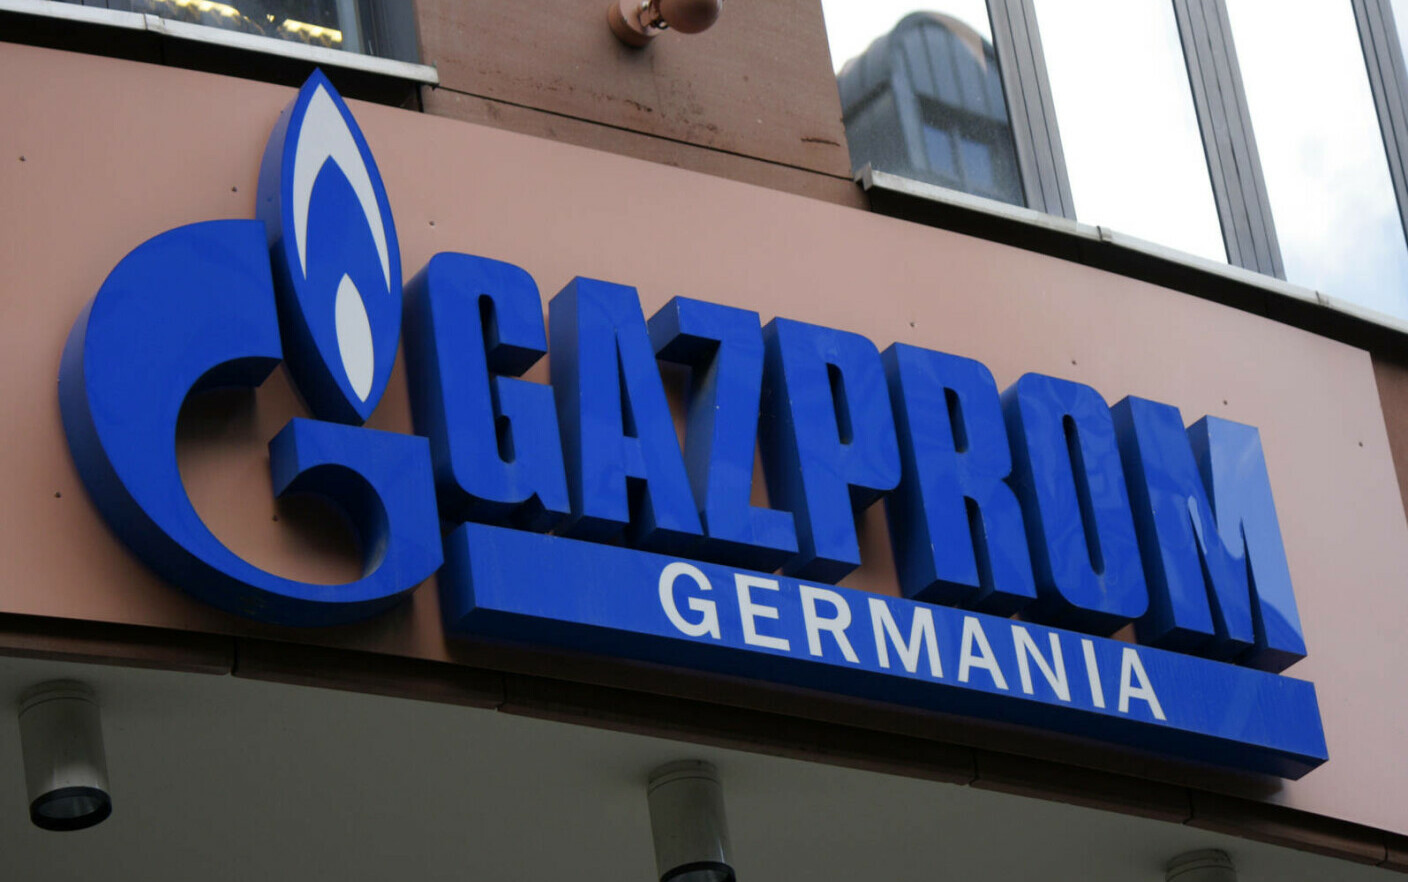 gazprom germania